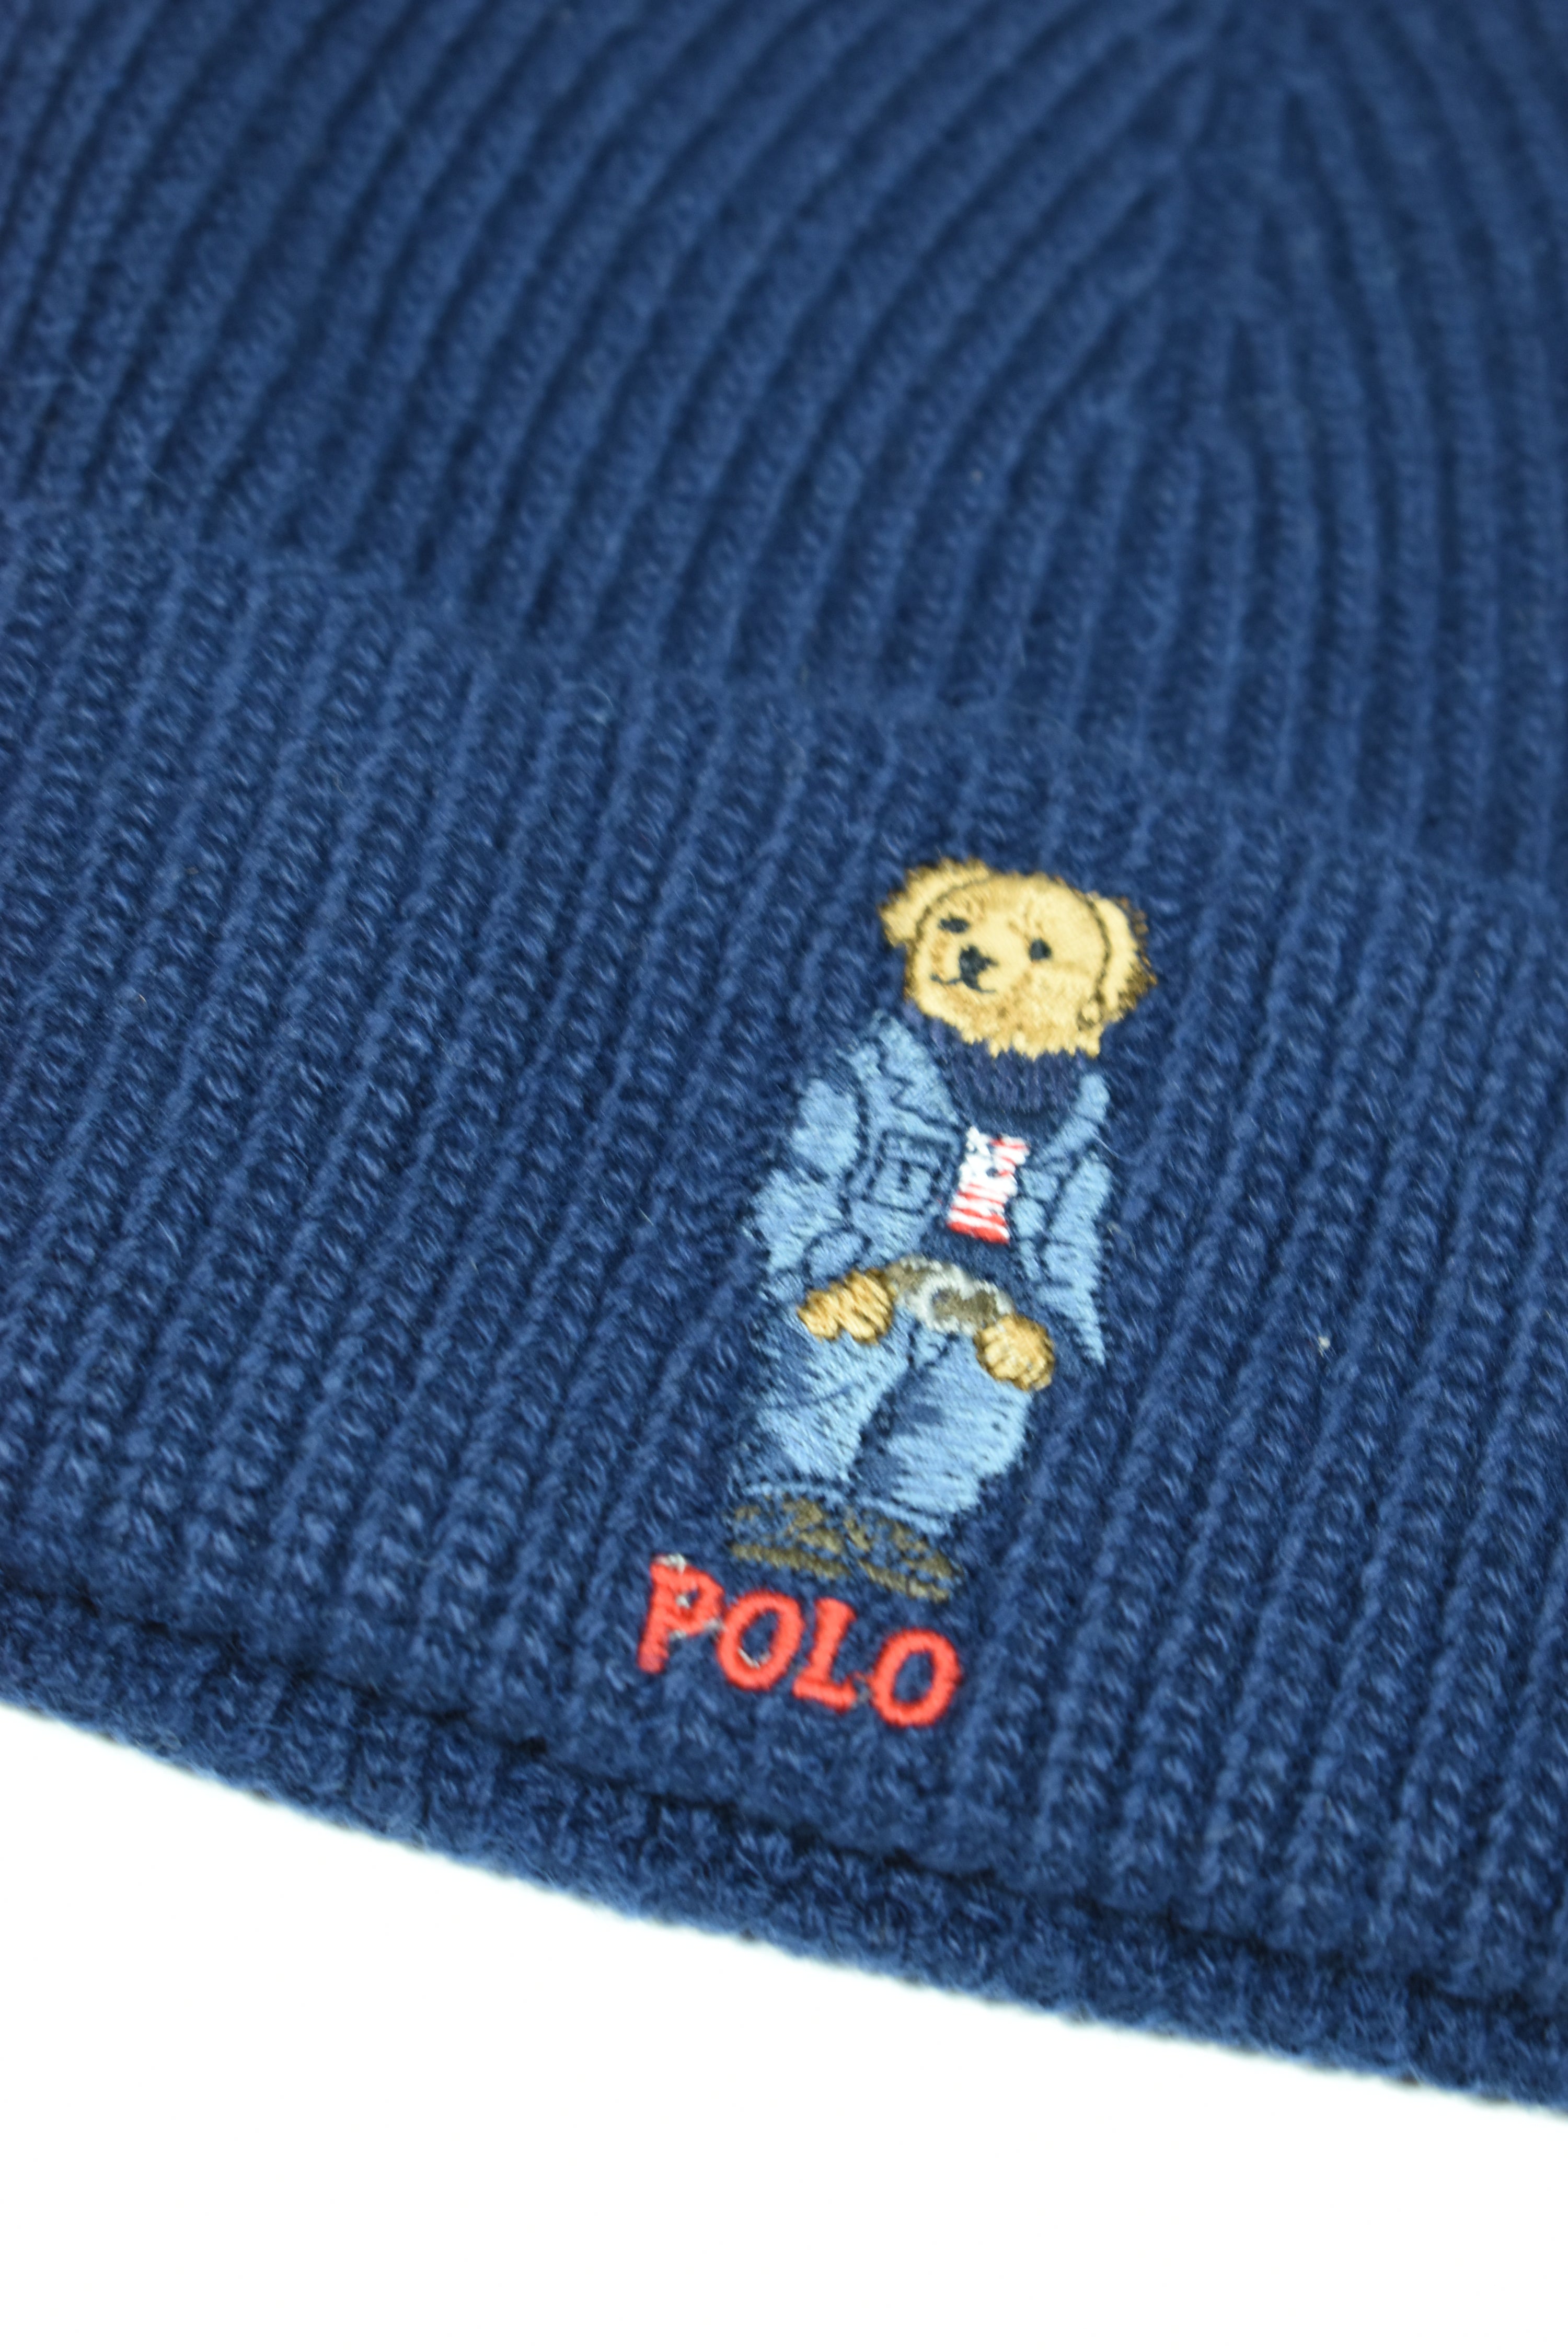 New Polo Bear Ralph Lauren Beanie Navy OS